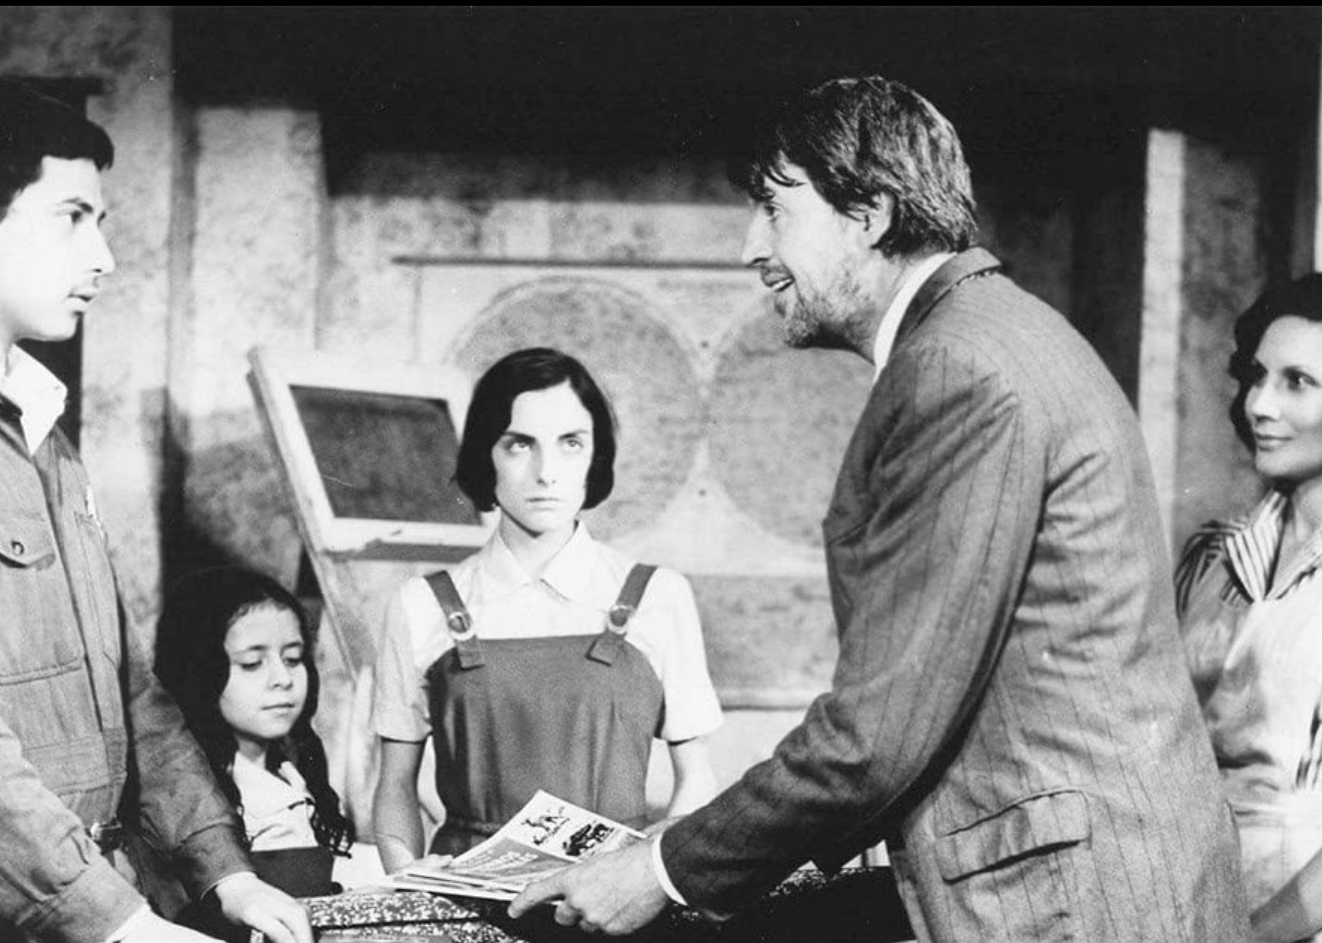 Arturo Beristáin, Gladys Bermejo, Diana Bracho, Claudio Brook, and Rita Macedo in a scene from "The Castle of Purity".